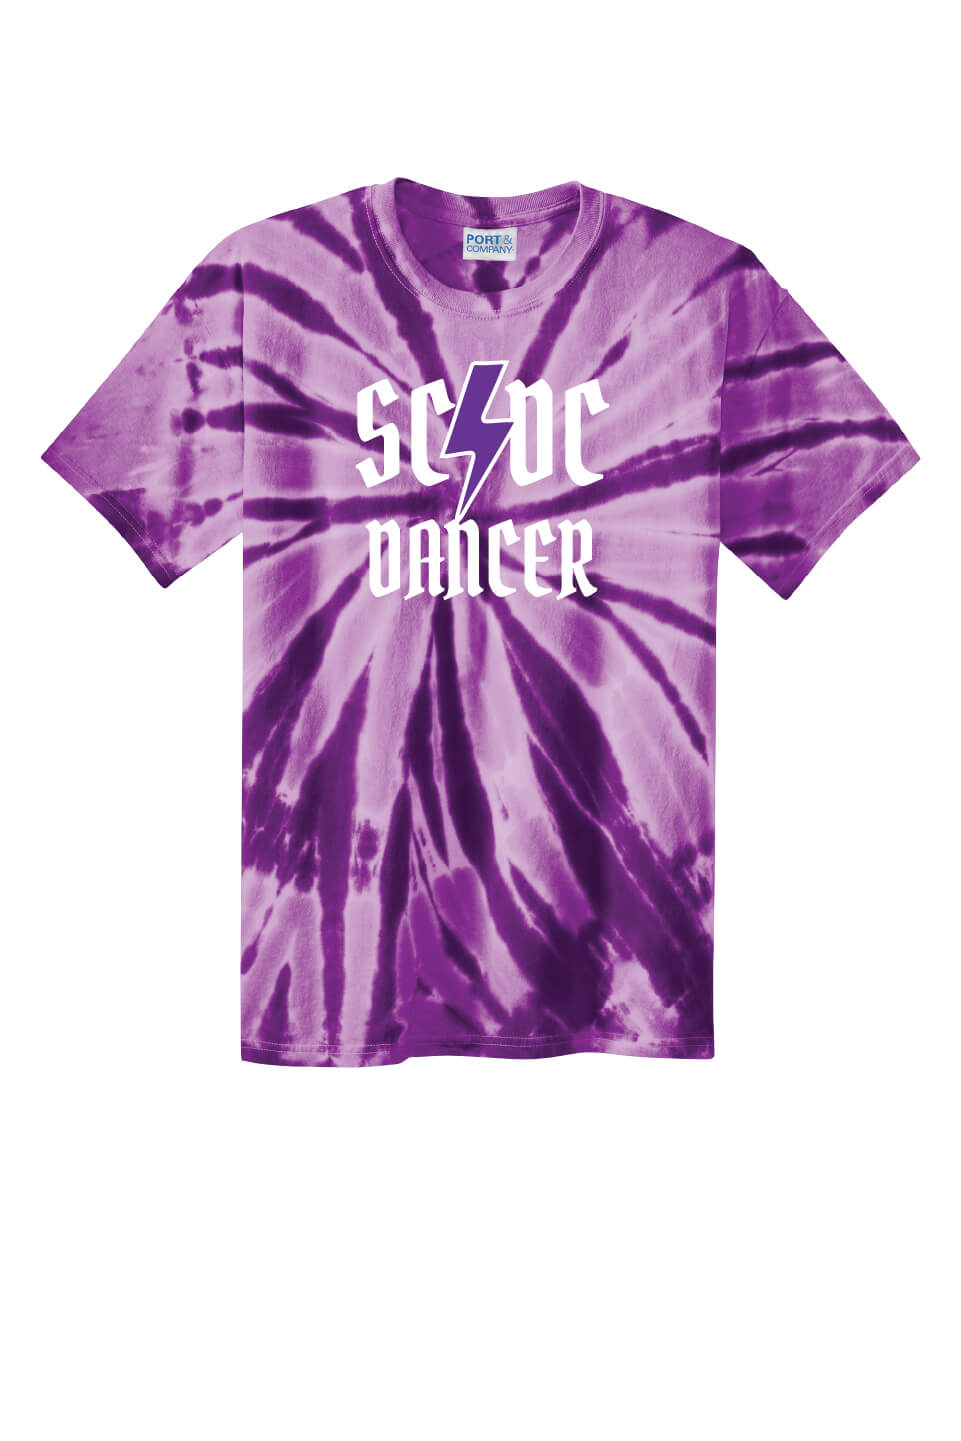 SCDC Dancer Tie Dye Short Sleeve T-Shirt (Youth) purple